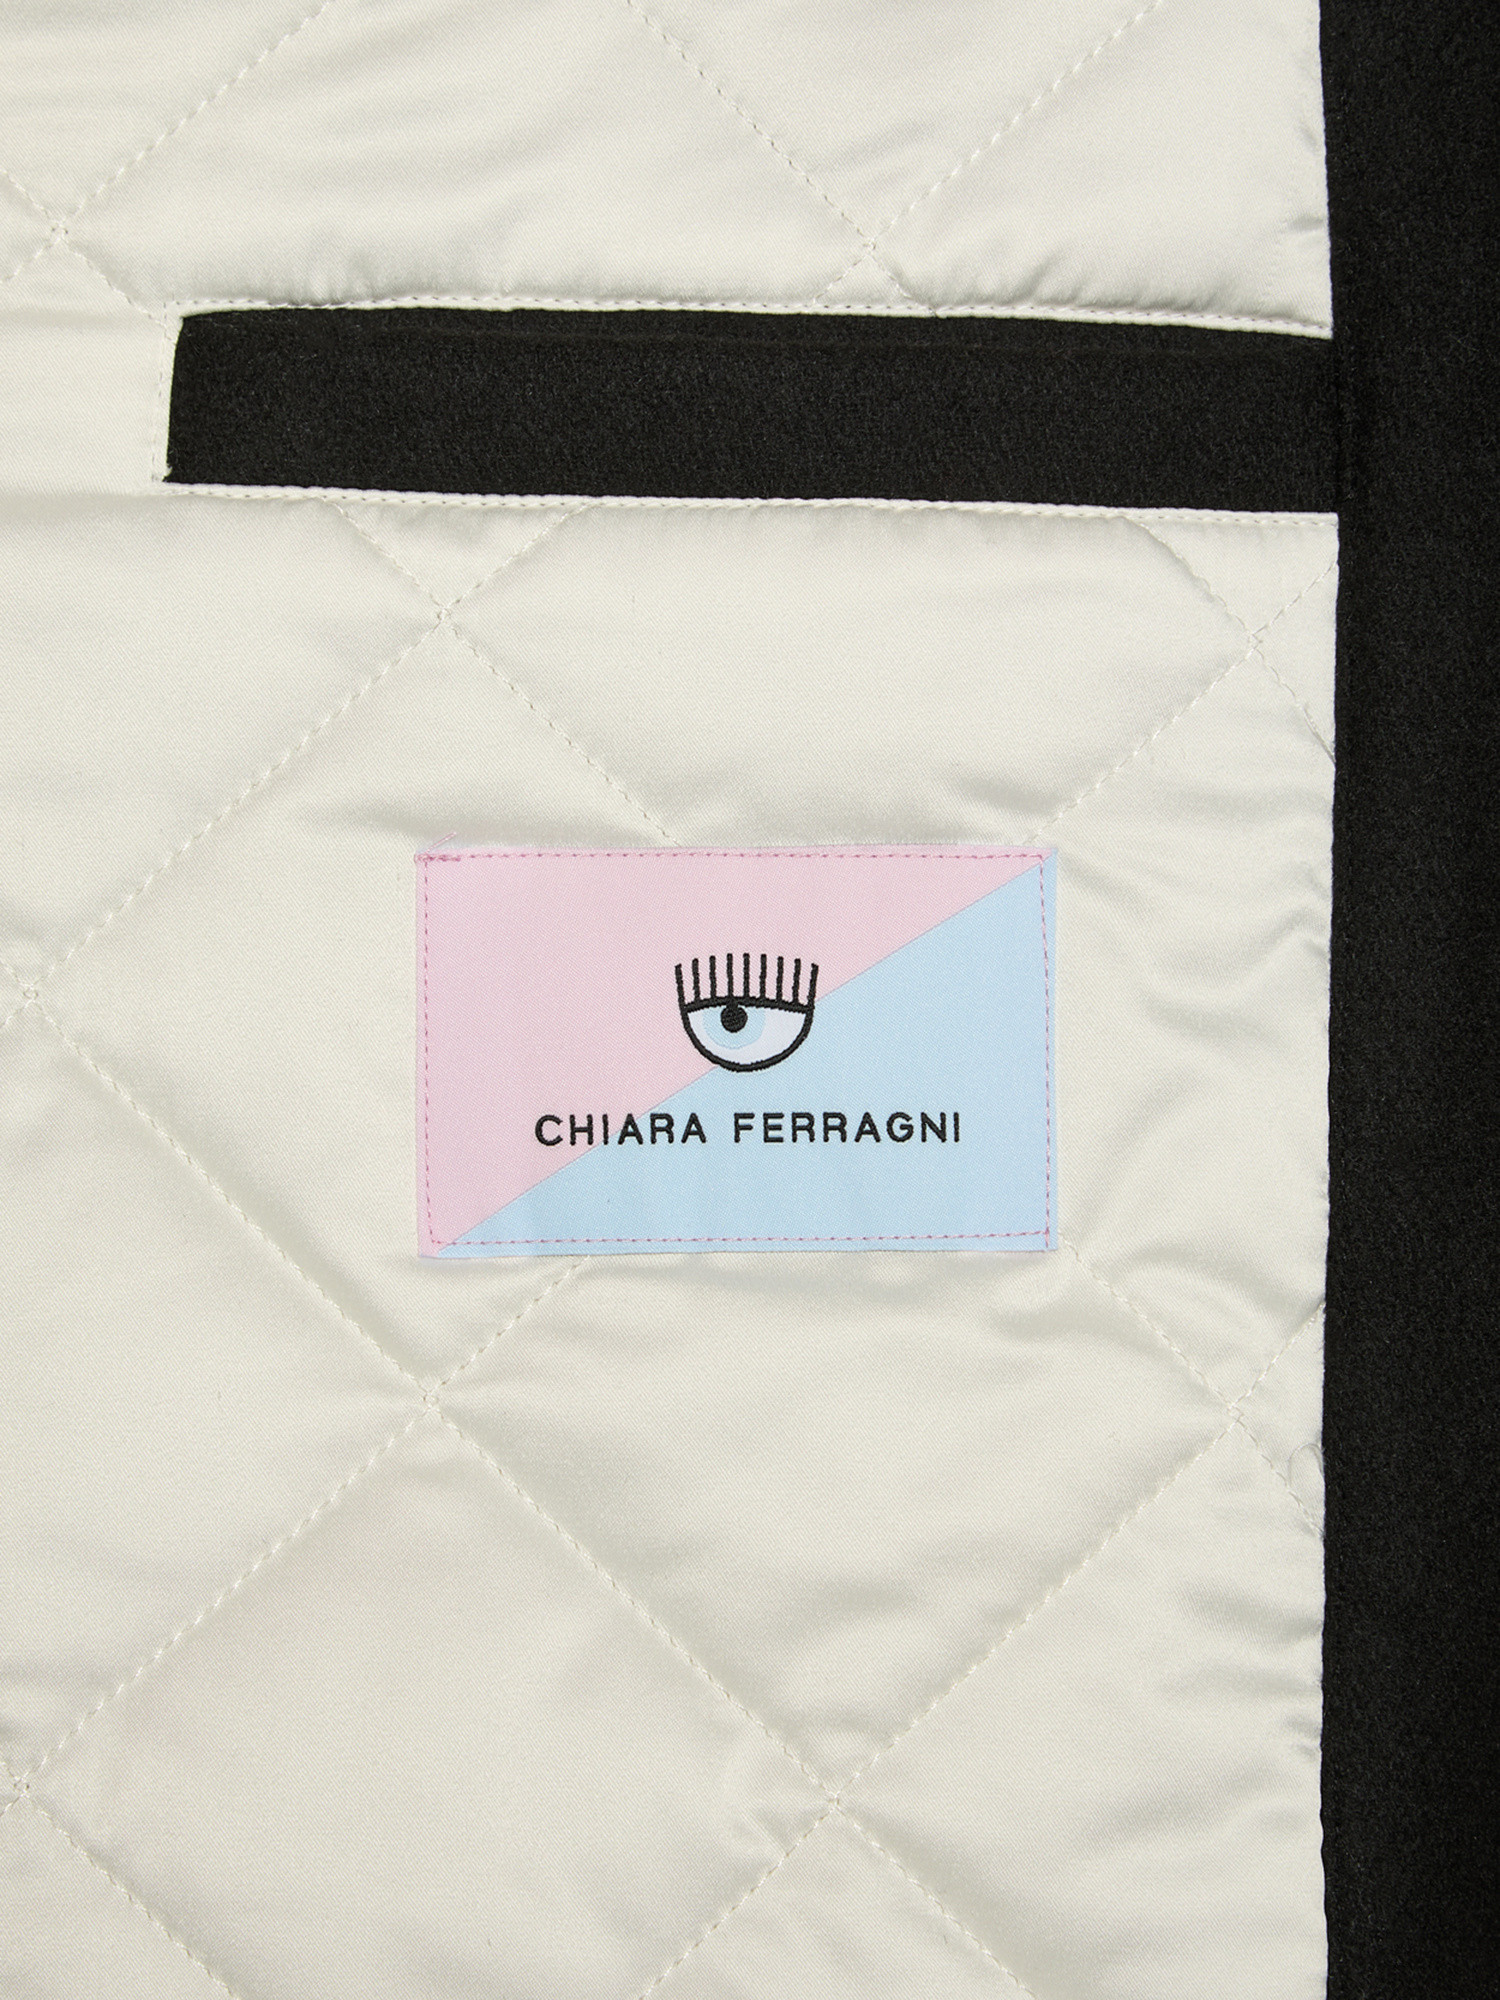 Chiara Ferragni - Ferragni stretch bomber jacket, Black, large image number 2